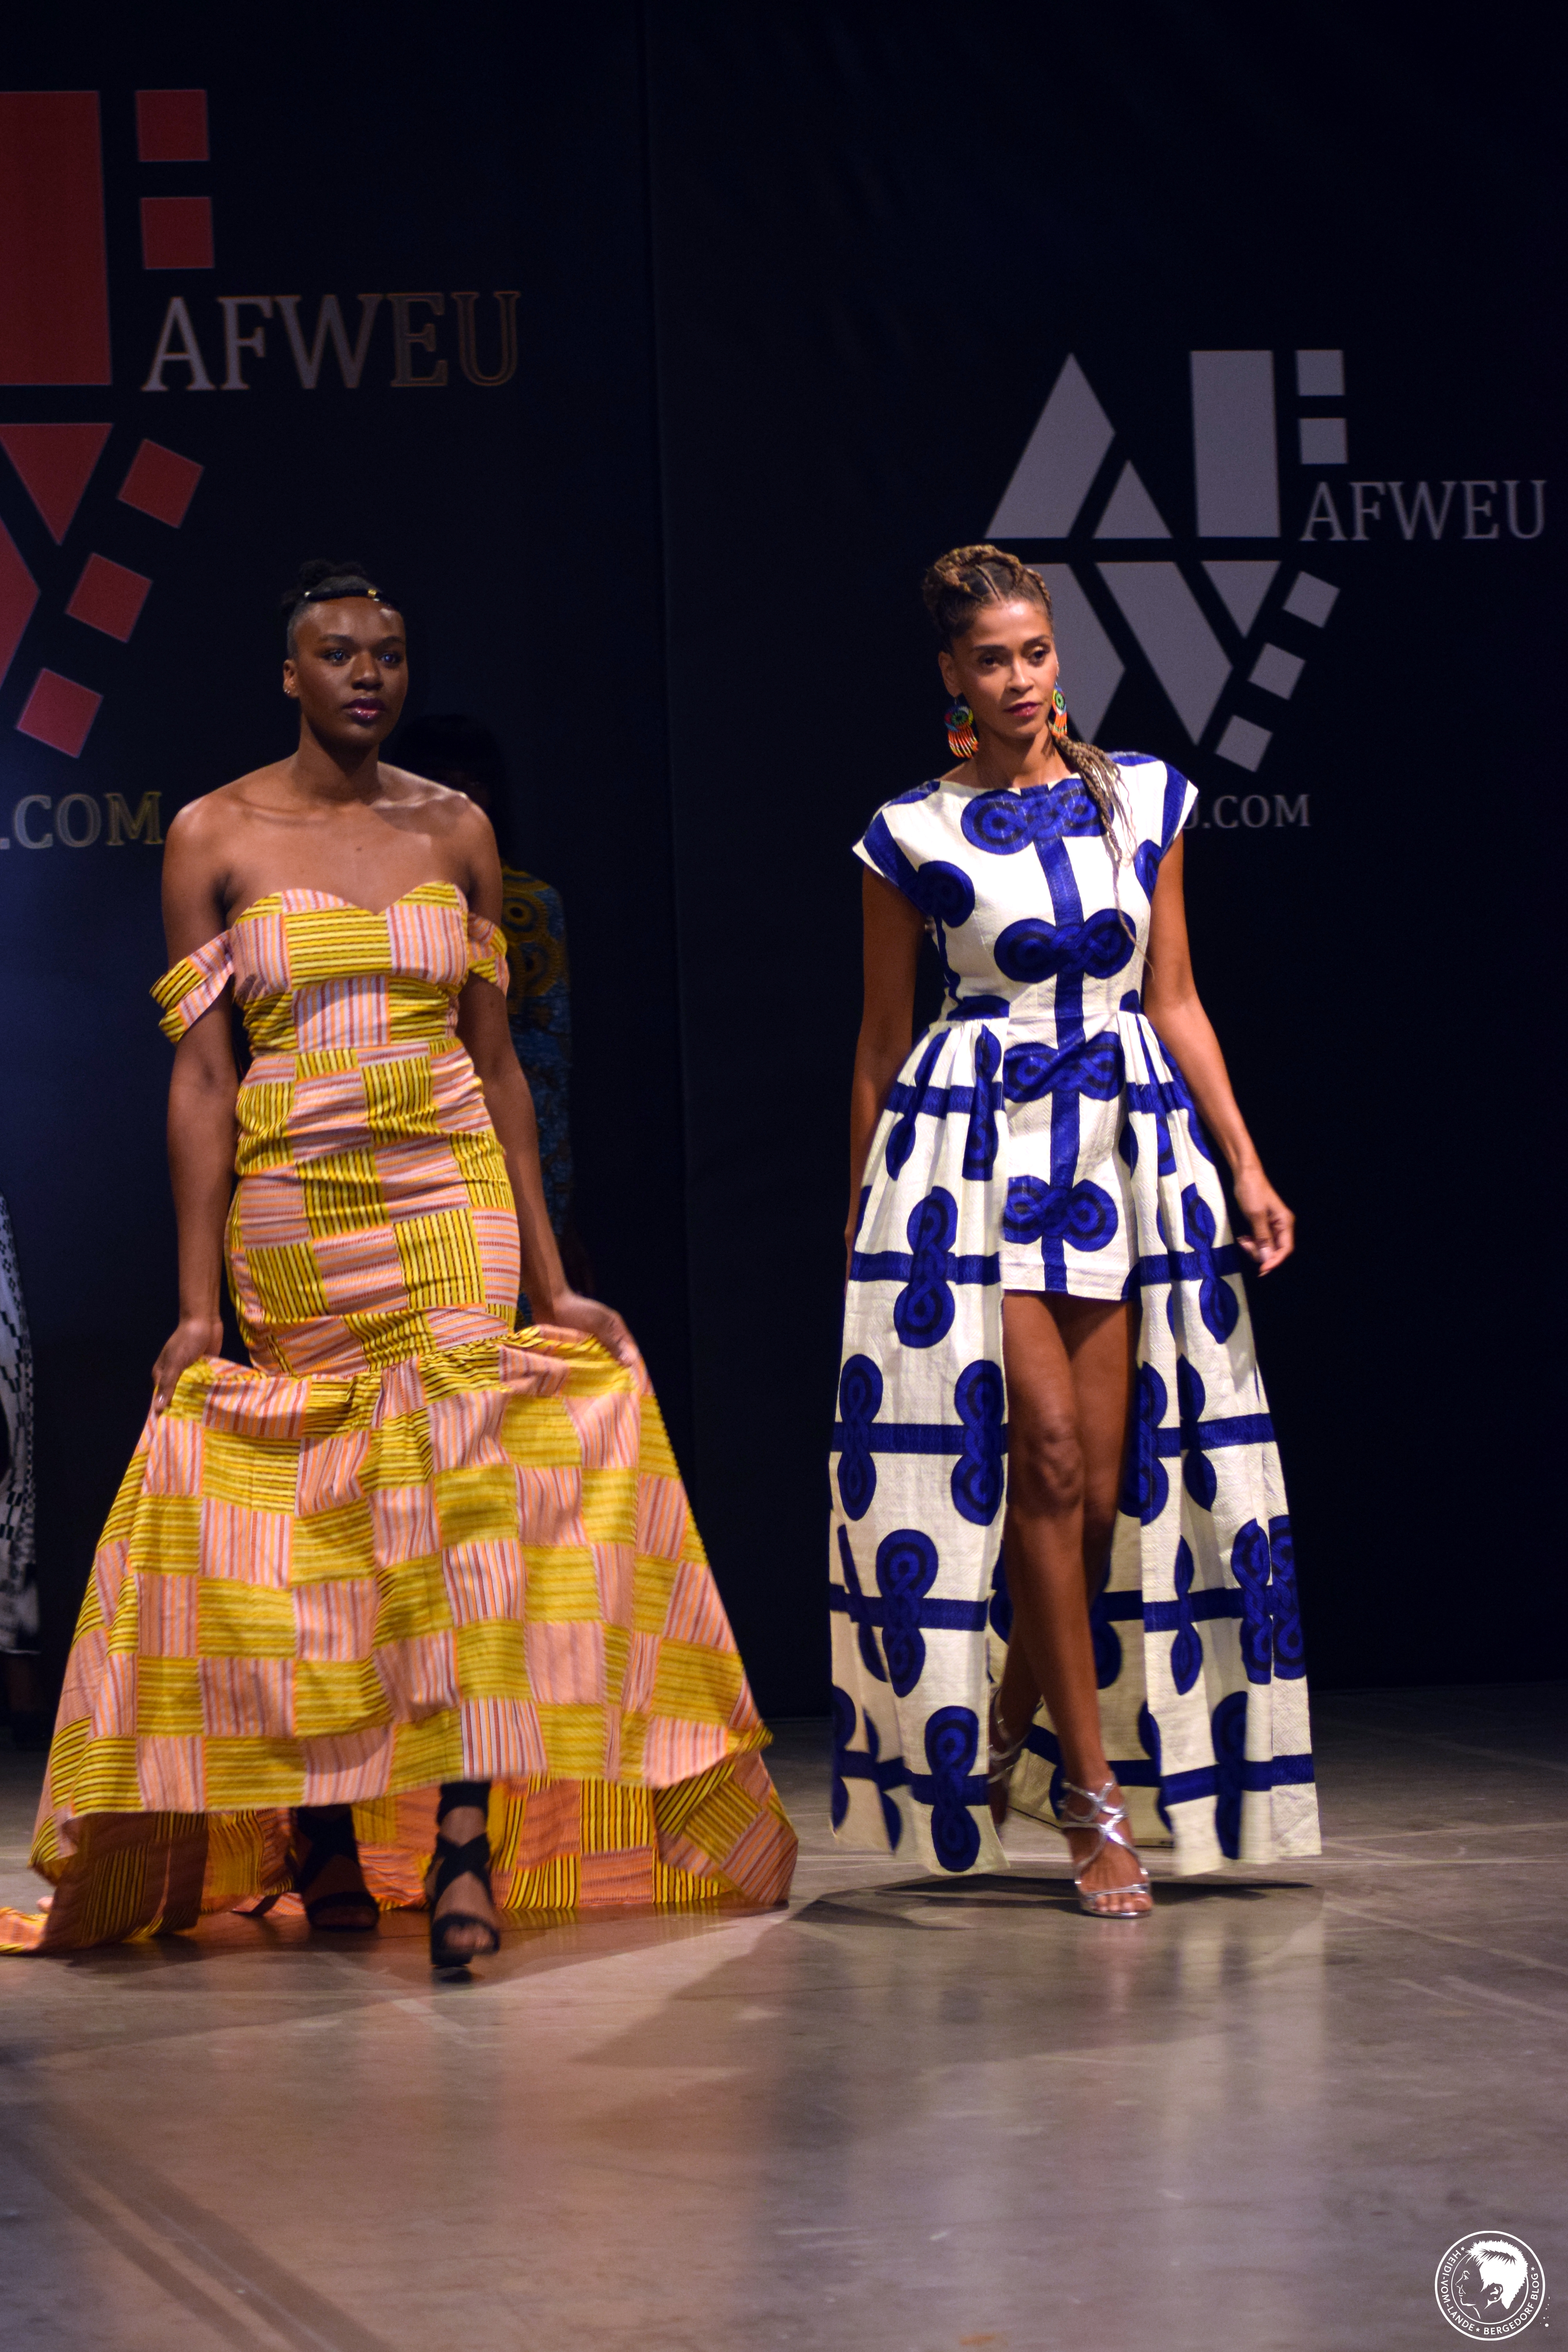 AFWEU, African Fashion Week Europe, Amsterdam, Model, Mode, Trends, Styling, Bikinimode, Männer, Frauen, African, Fashion Show, Aydin Acik, Asien Fashion Week, Bloggerlife, Style, neuste Mode, 2018